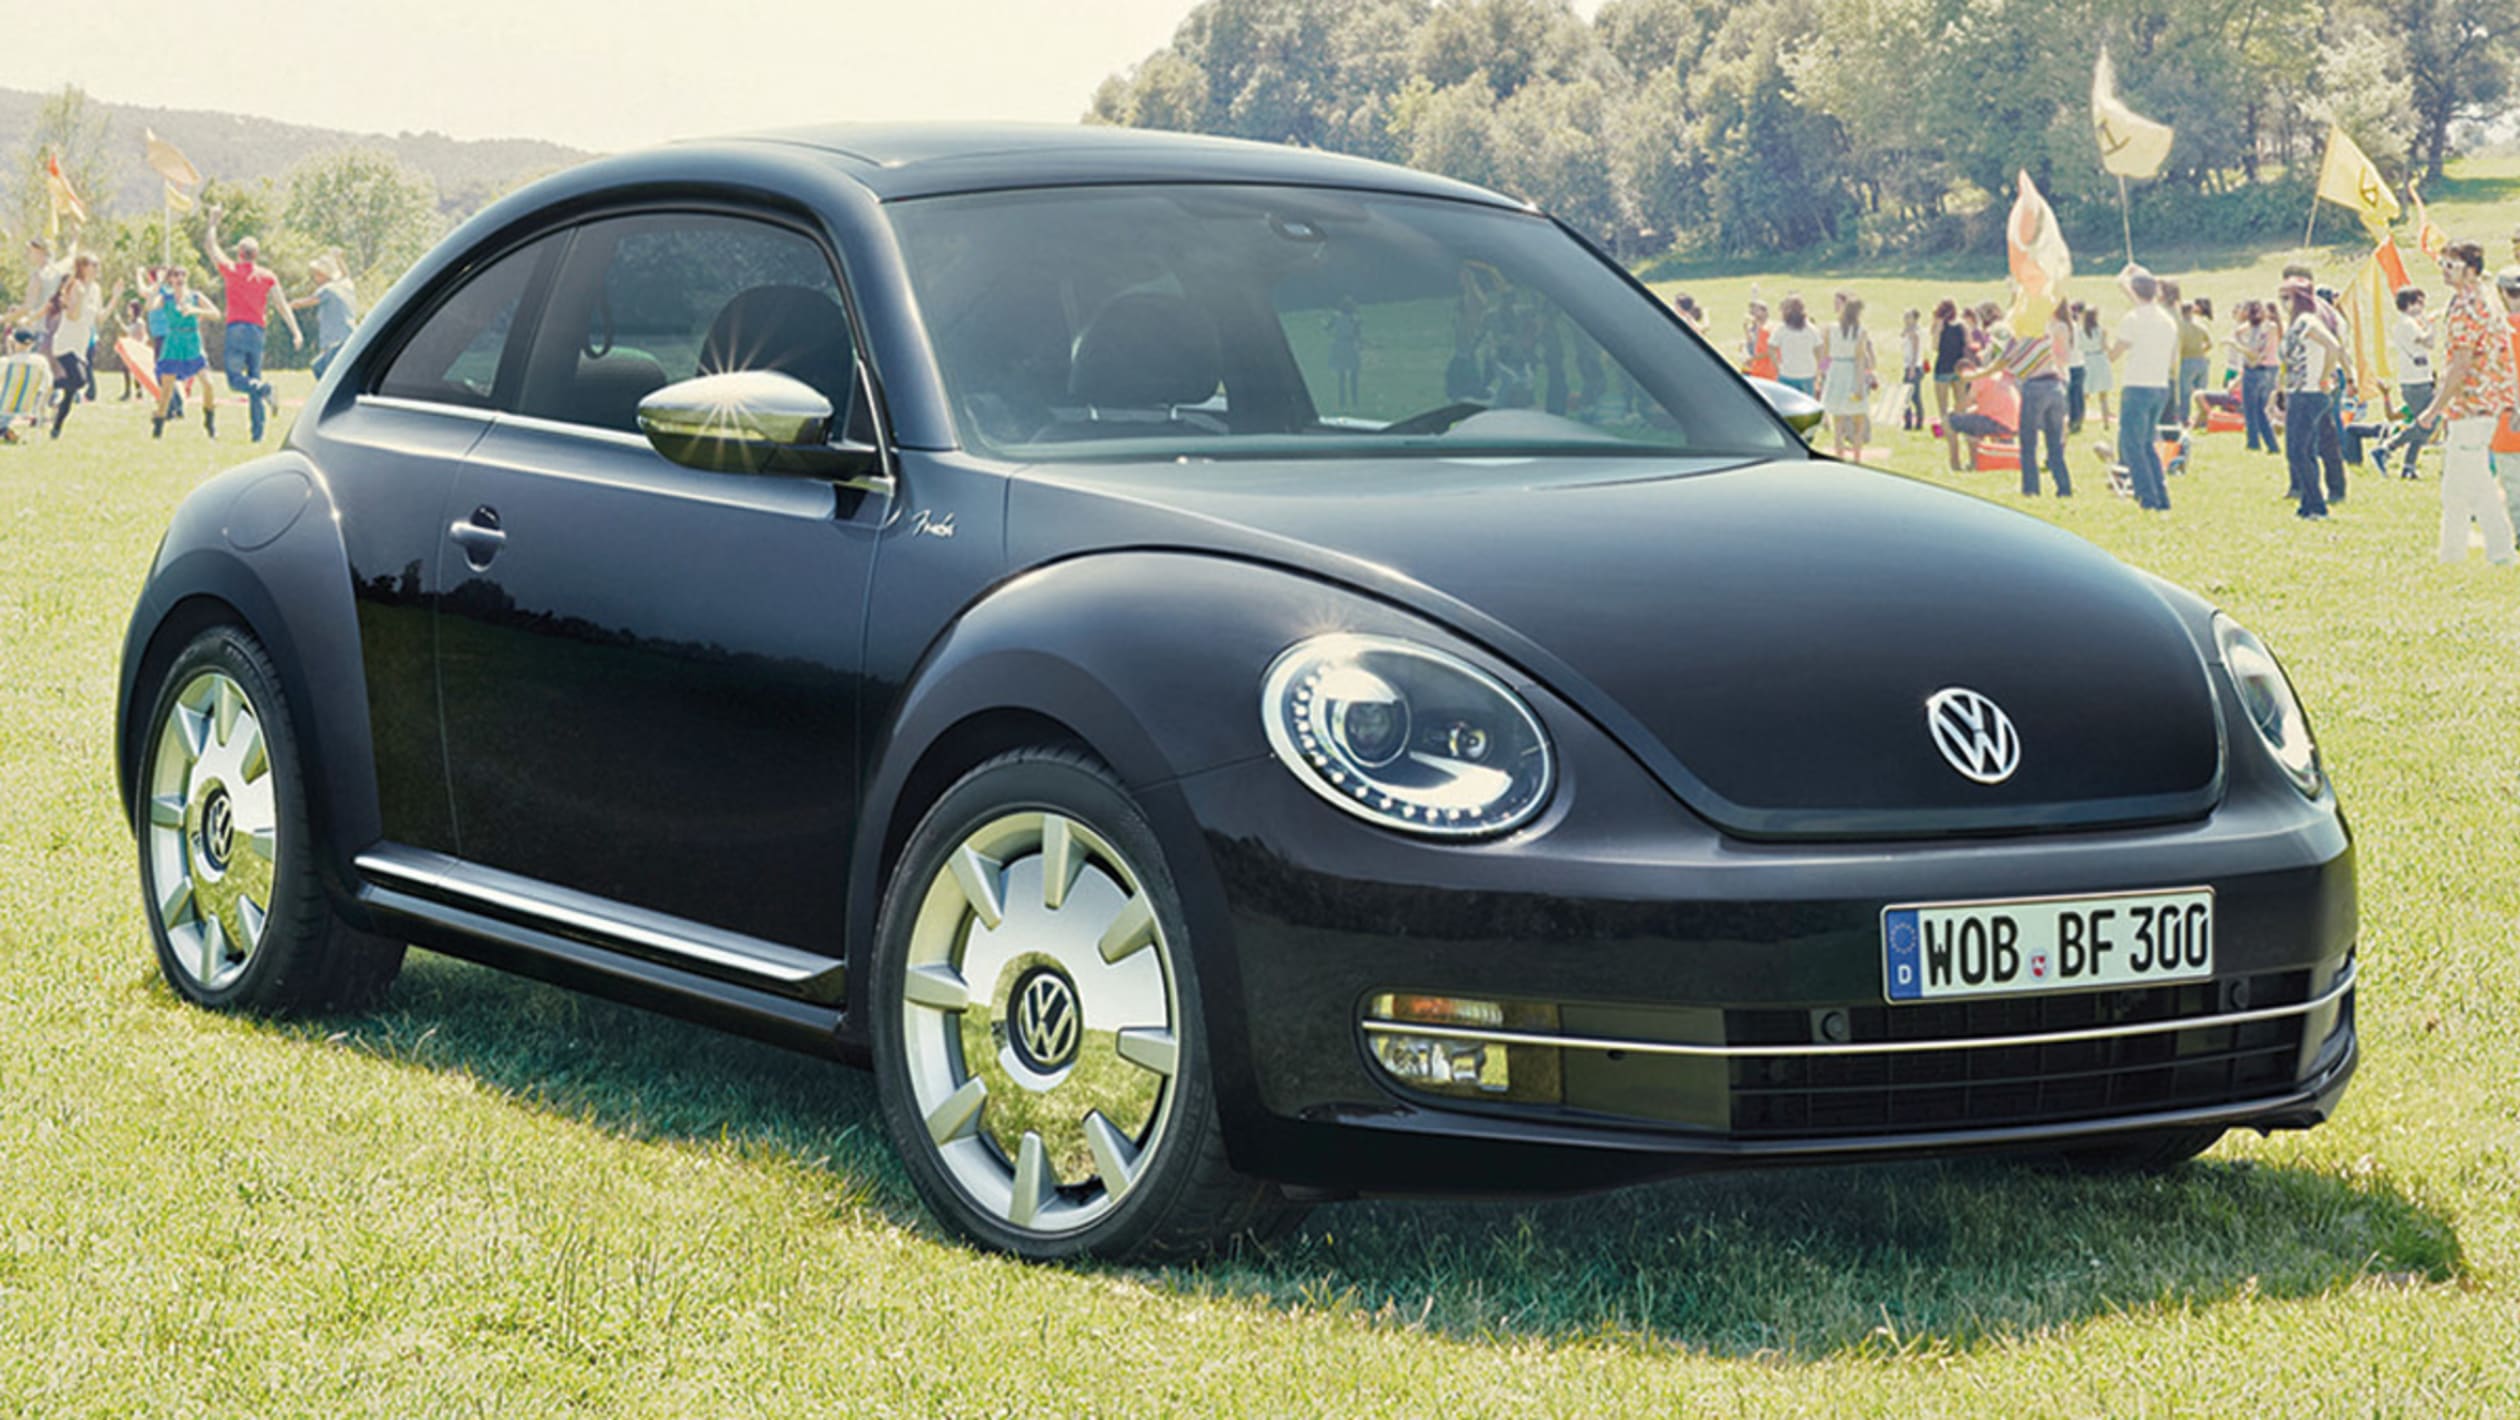 Limitededition VW Beetle Fender pictures Auto Express